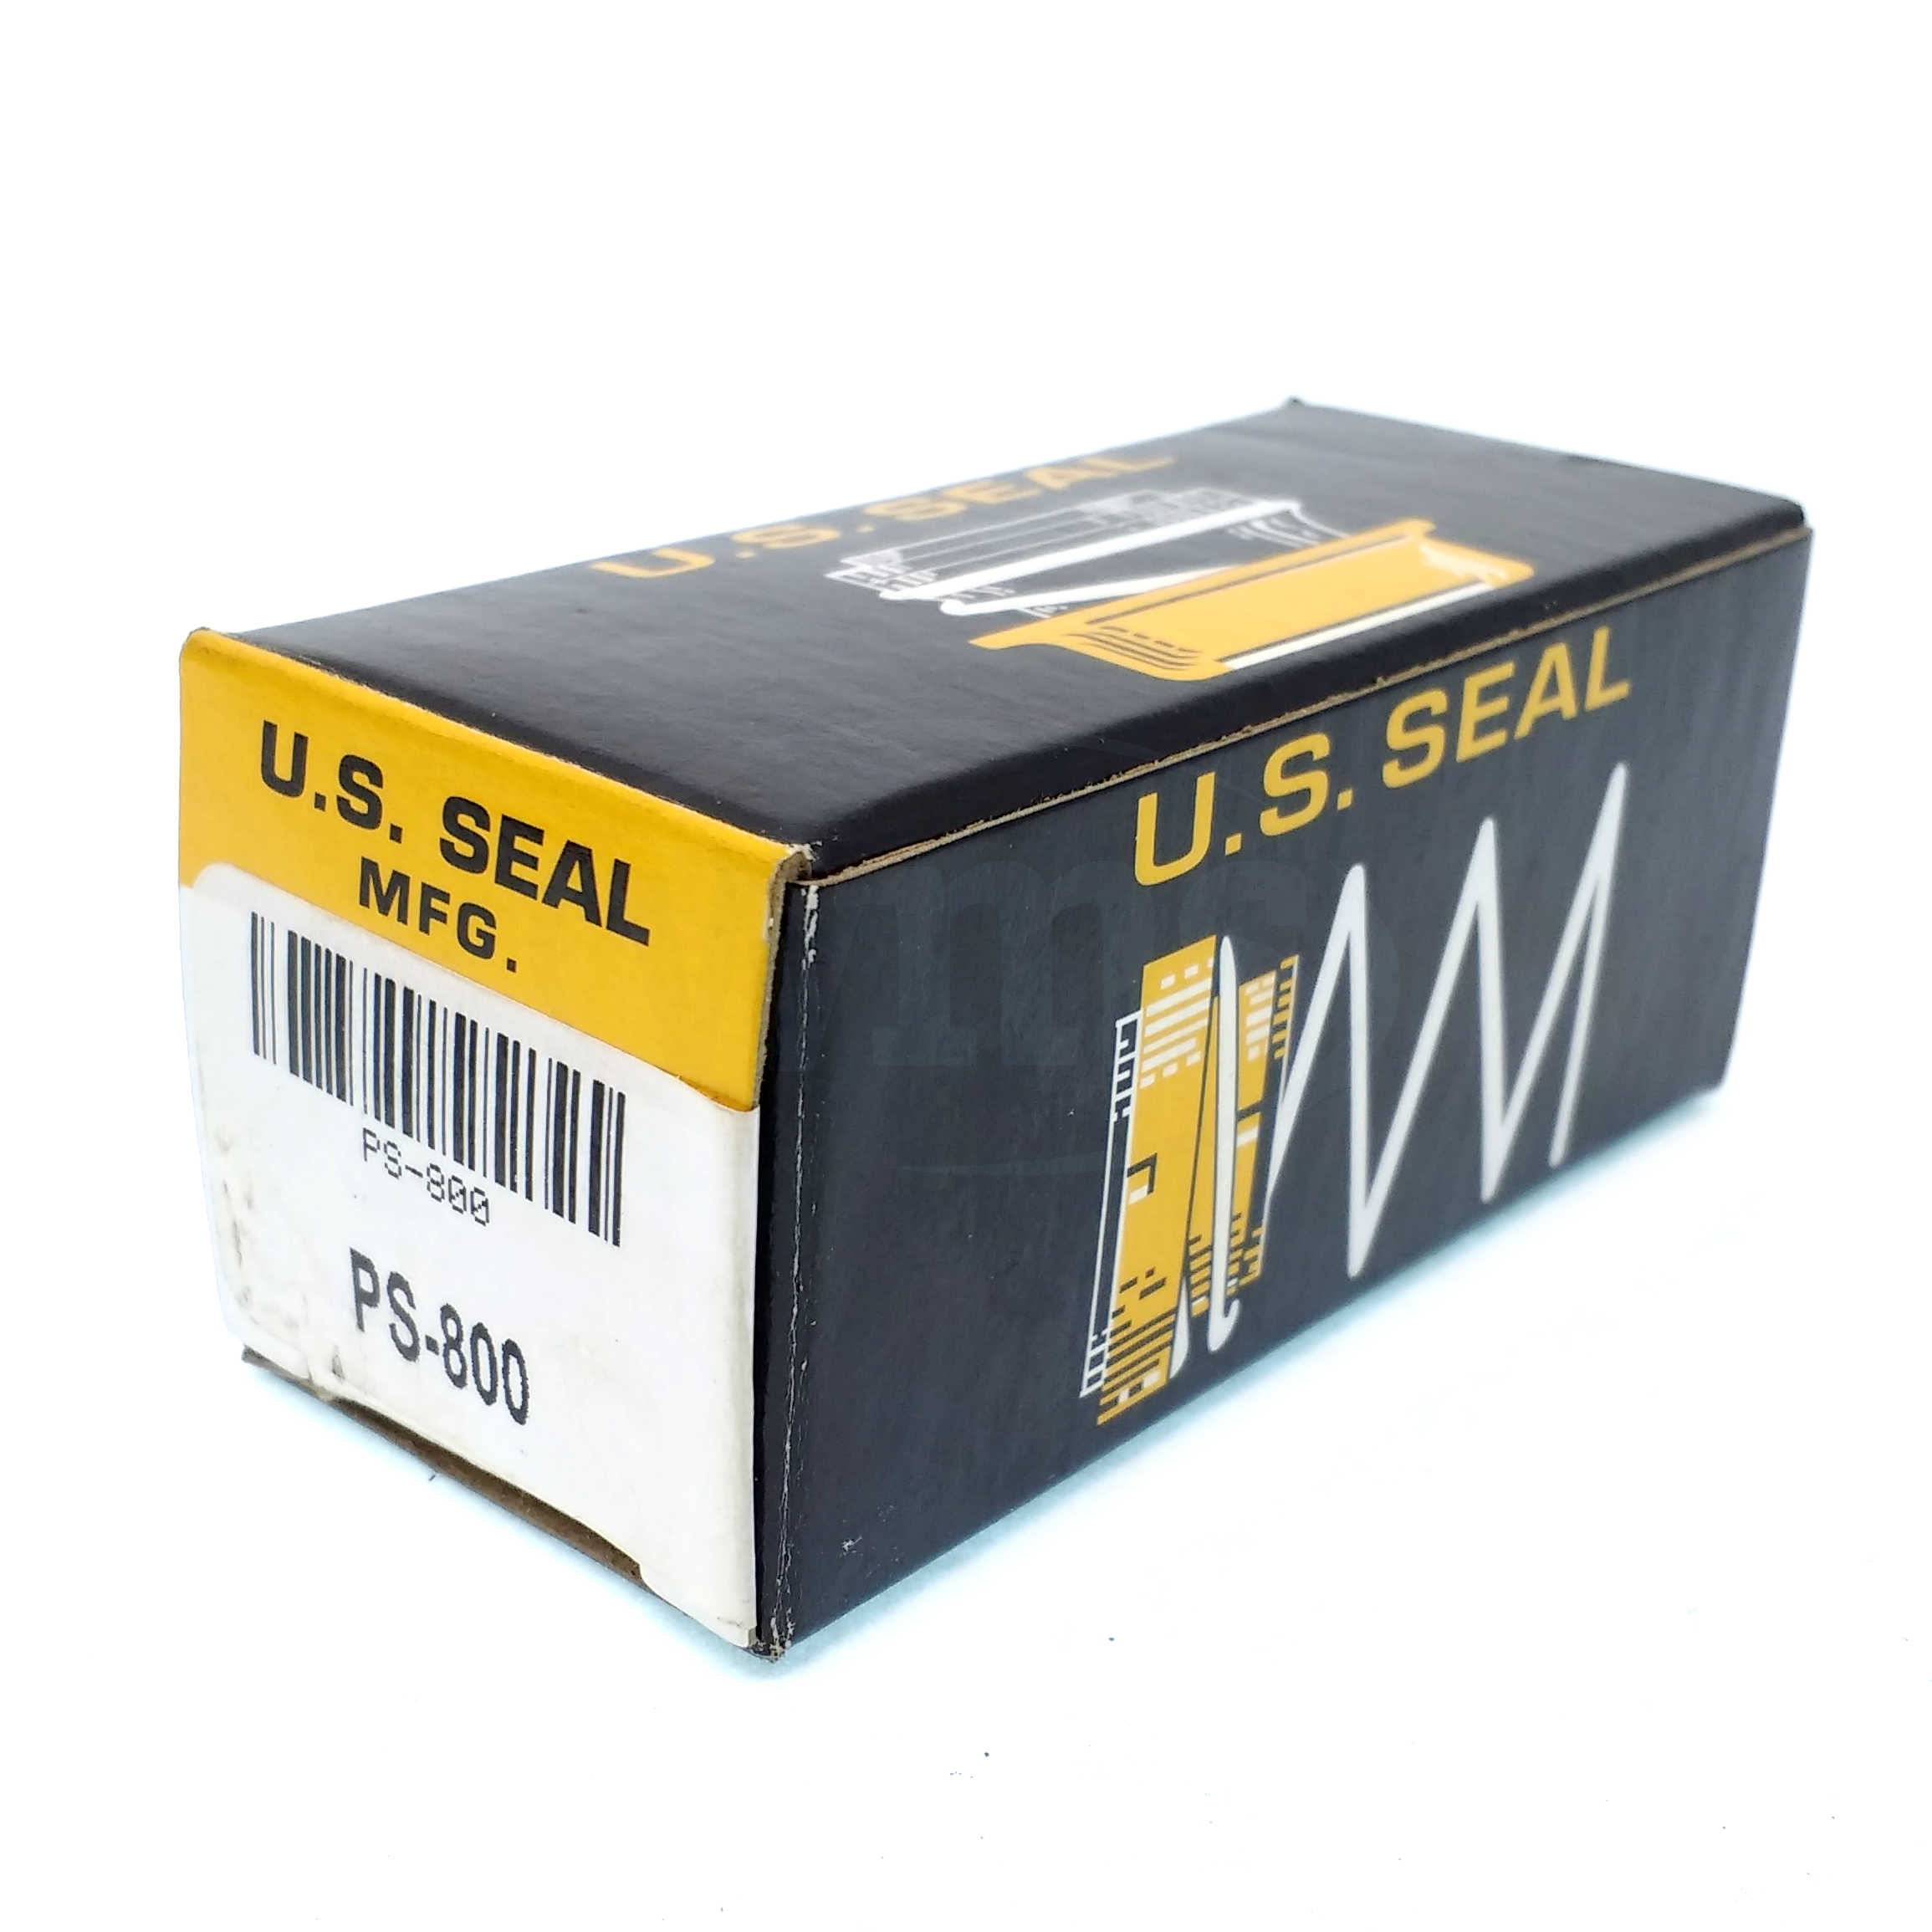 PS-800 U.S. Seal Mfg 5/8' Pump Seal 8